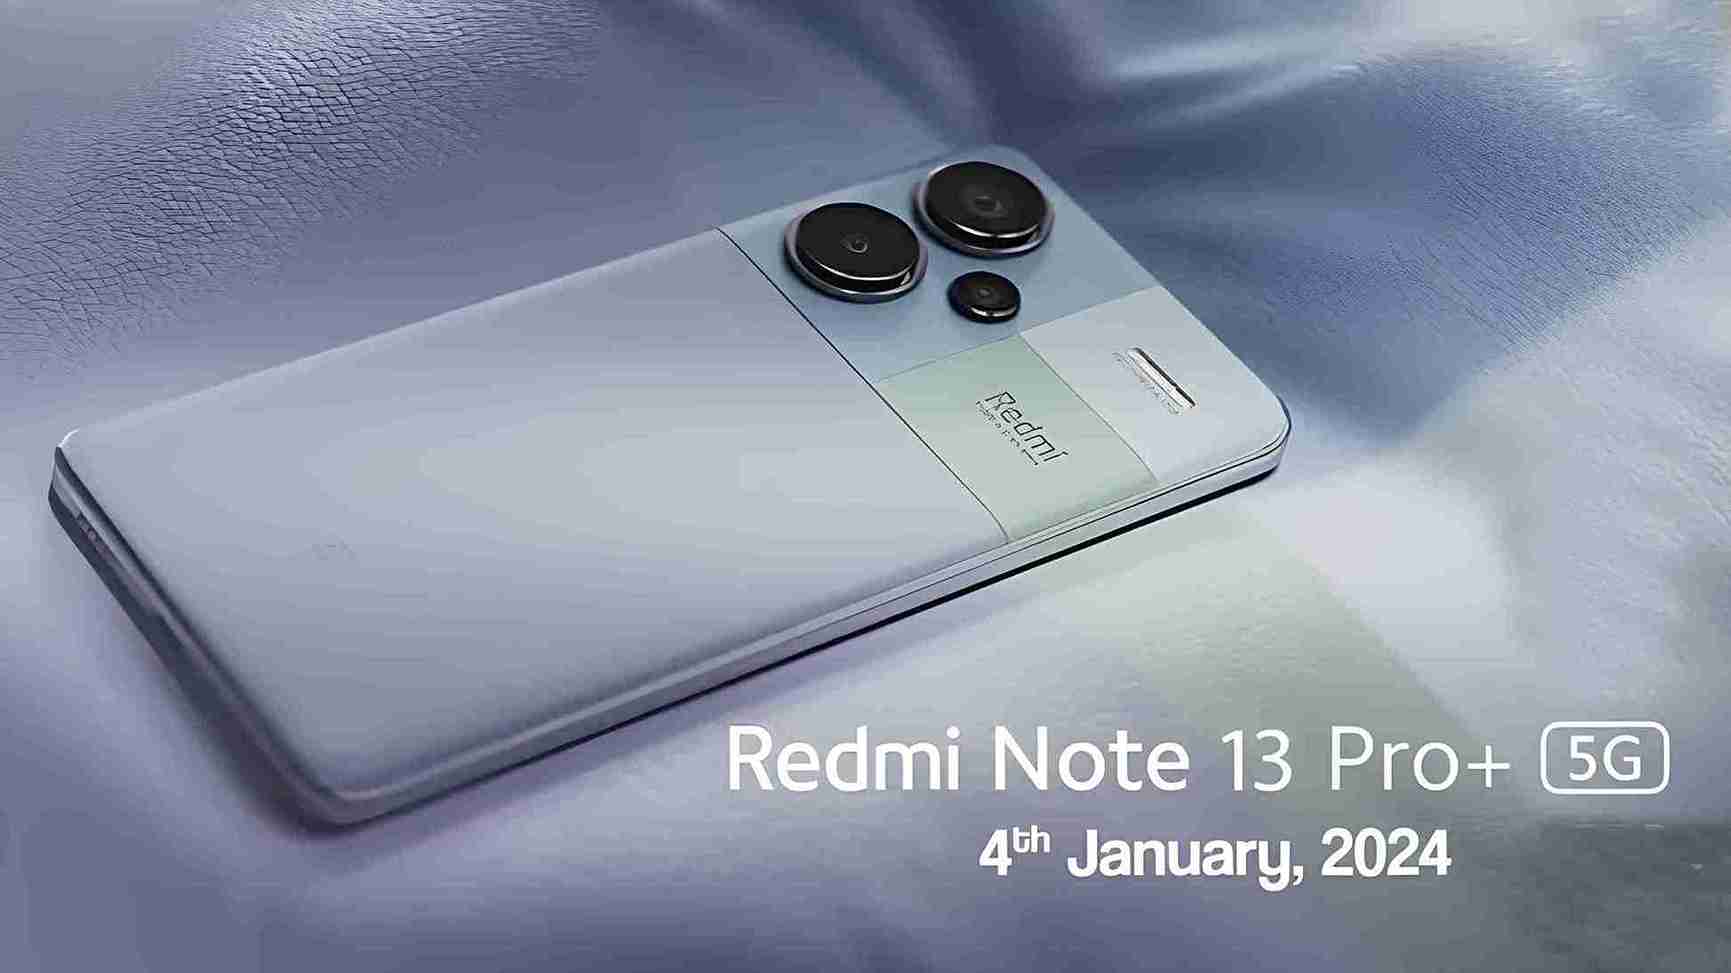 Redmi Note 13 Pro plus launch date in India